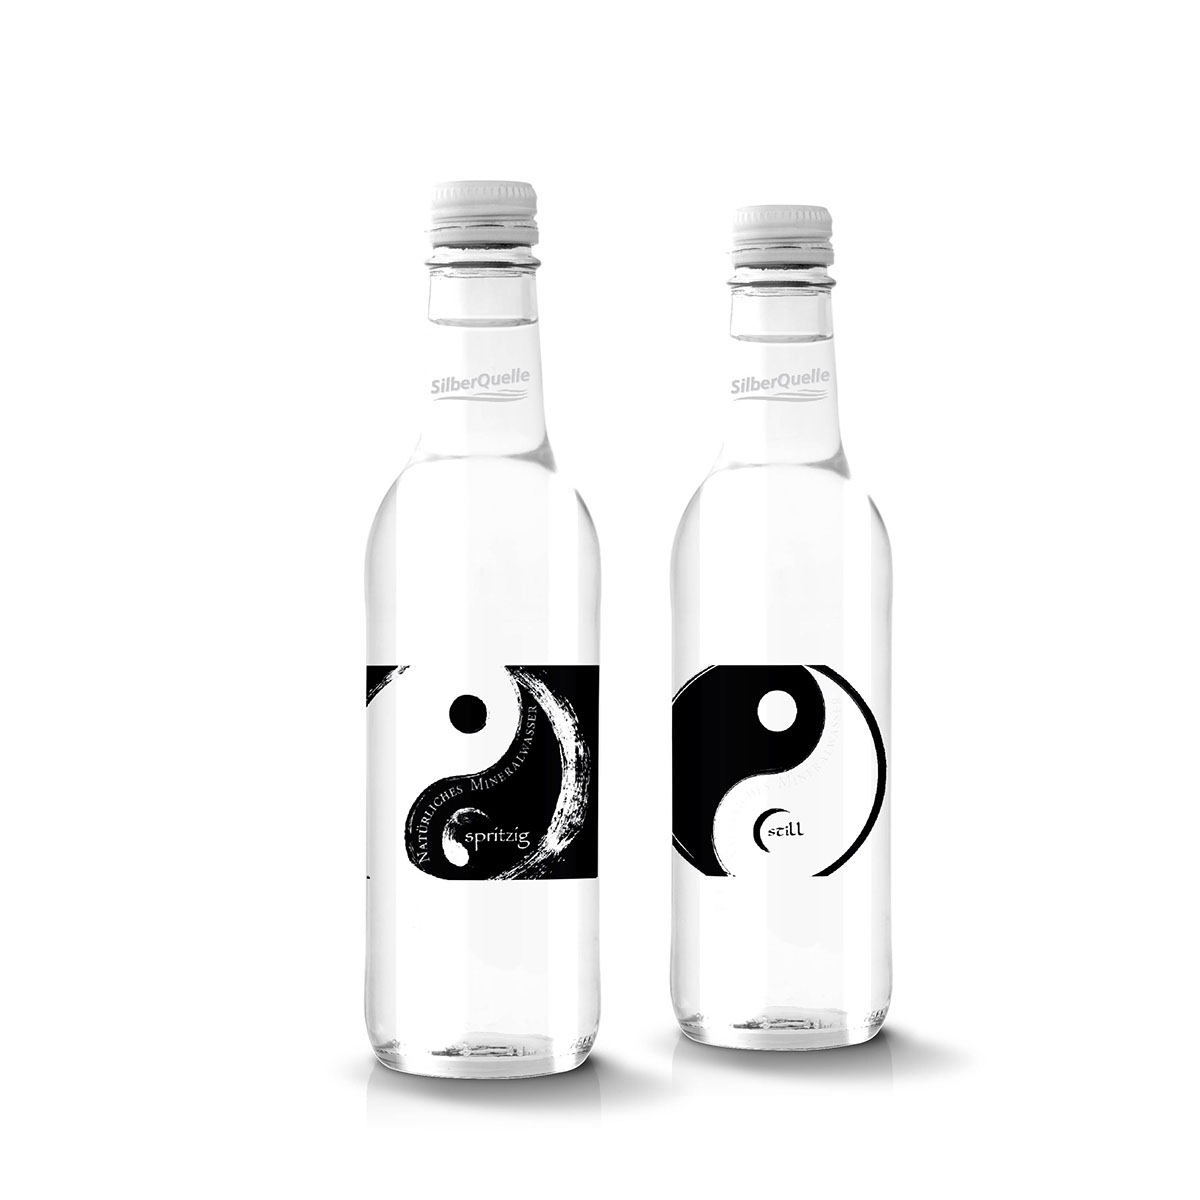 Adobe Portfolio #waterbottle #Design #packaging #blackandwhite #graphicDesign #Branding #yingyang #duality